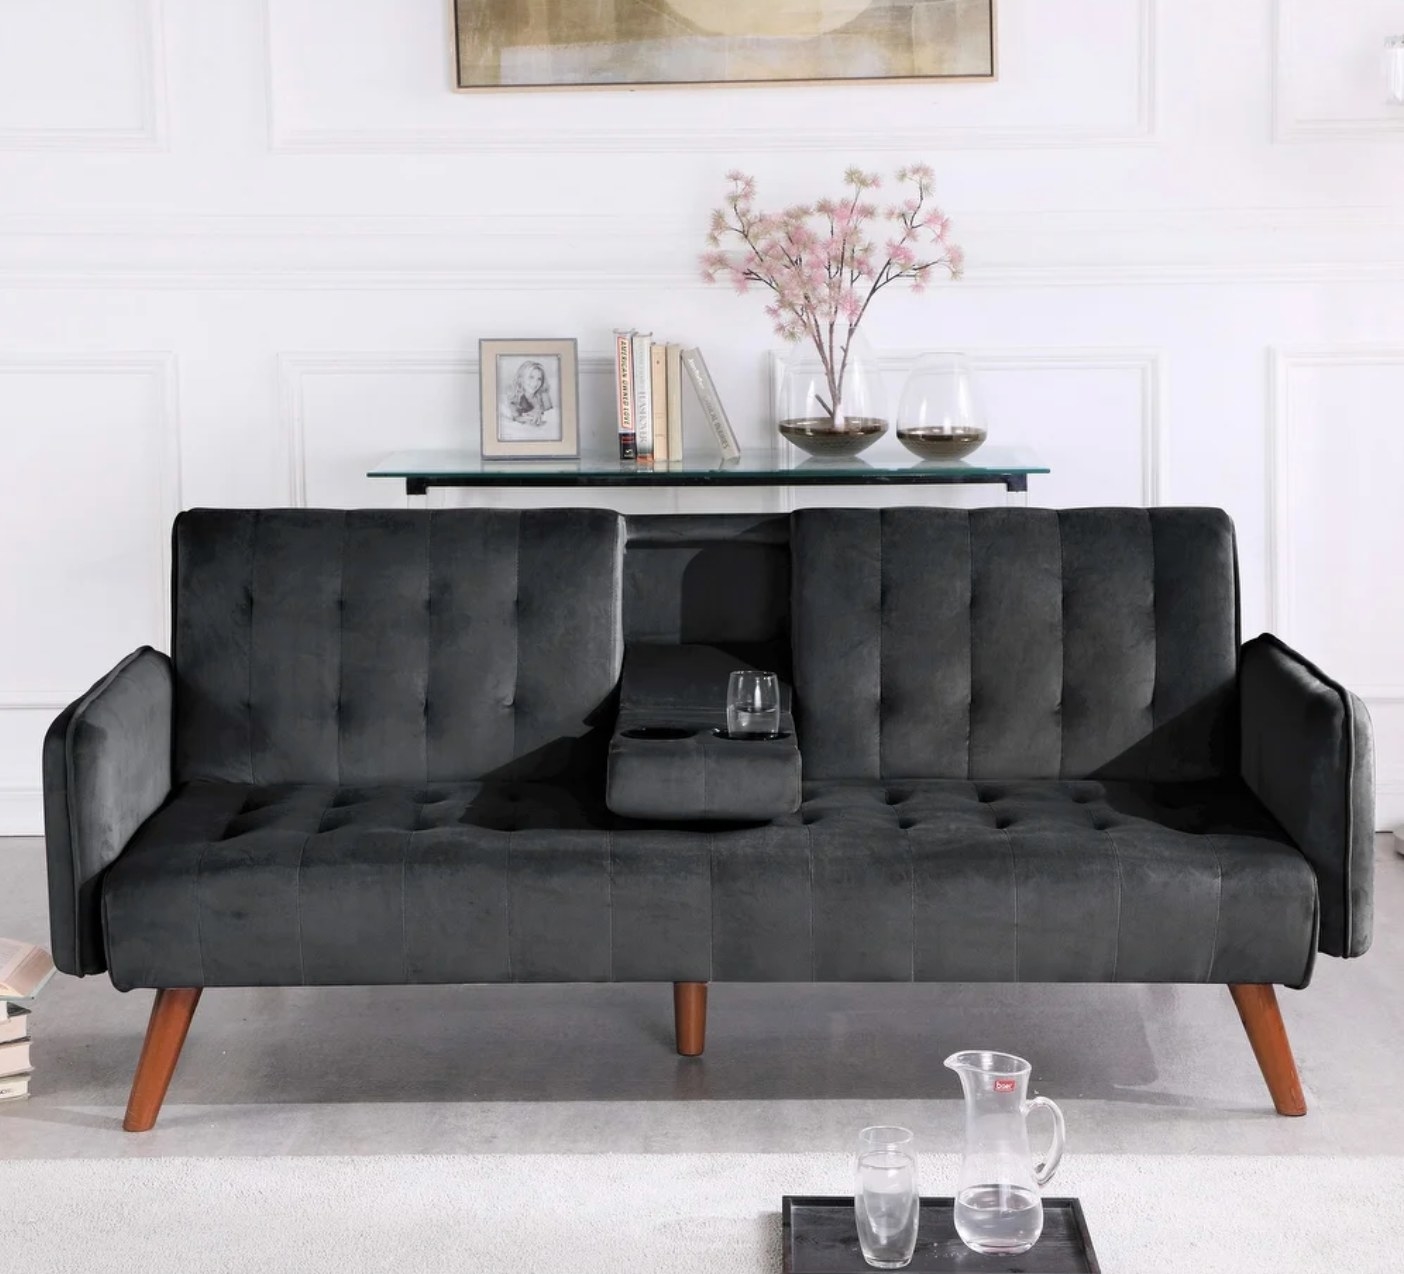 The convertible sleeper sofa in black